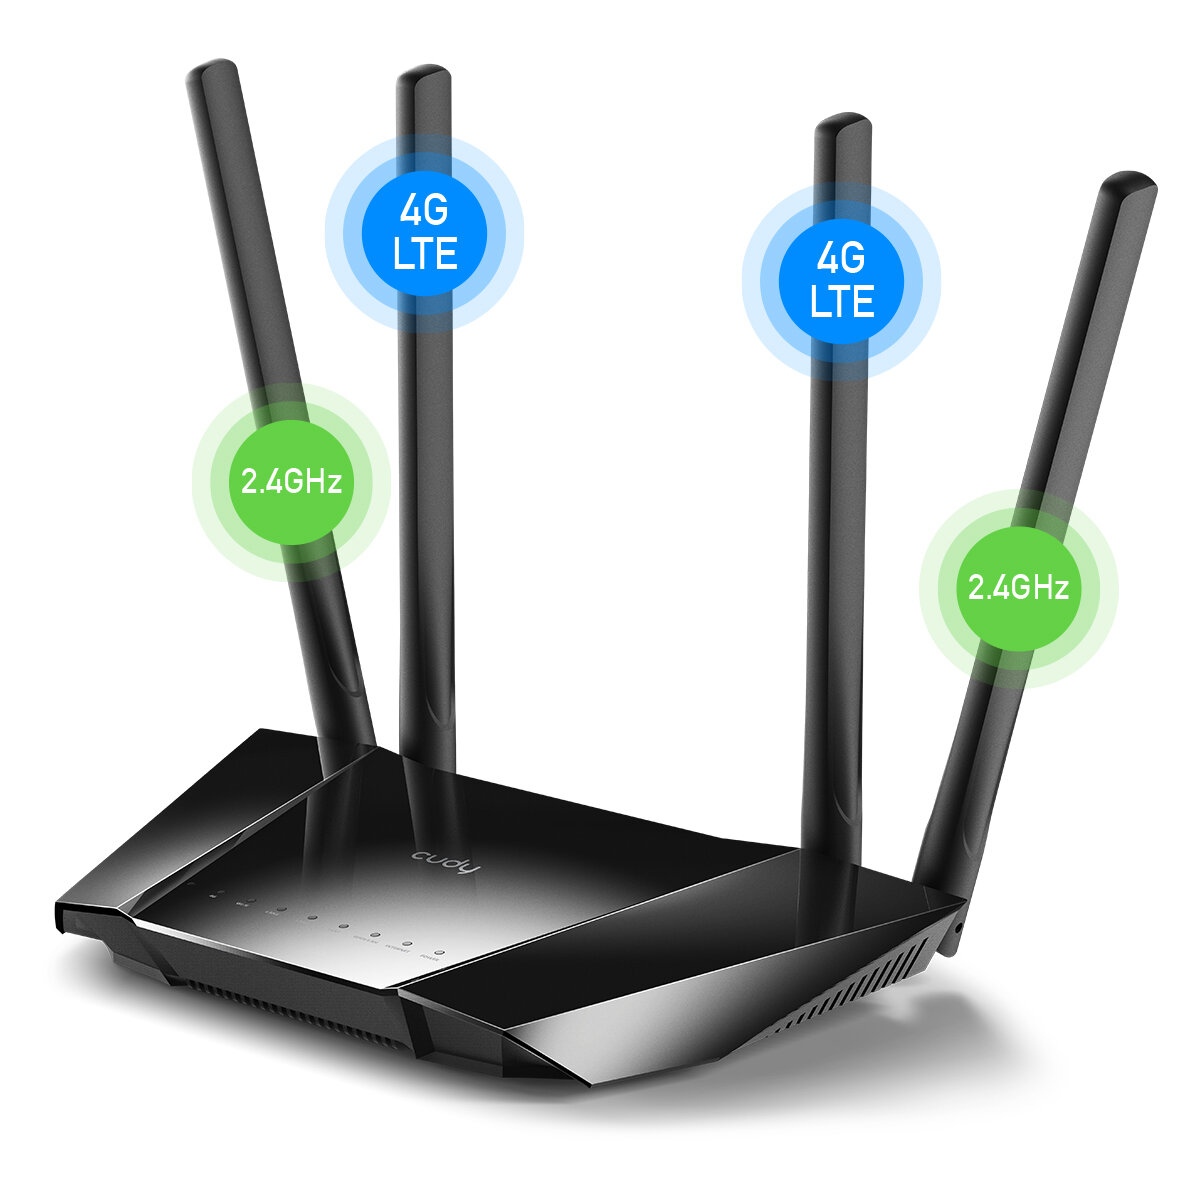 Router Cudy LT400 LTE widok routera pod skosem z oznaczonymi 2 antenami LTE i 2 antenami 2.4 GHz